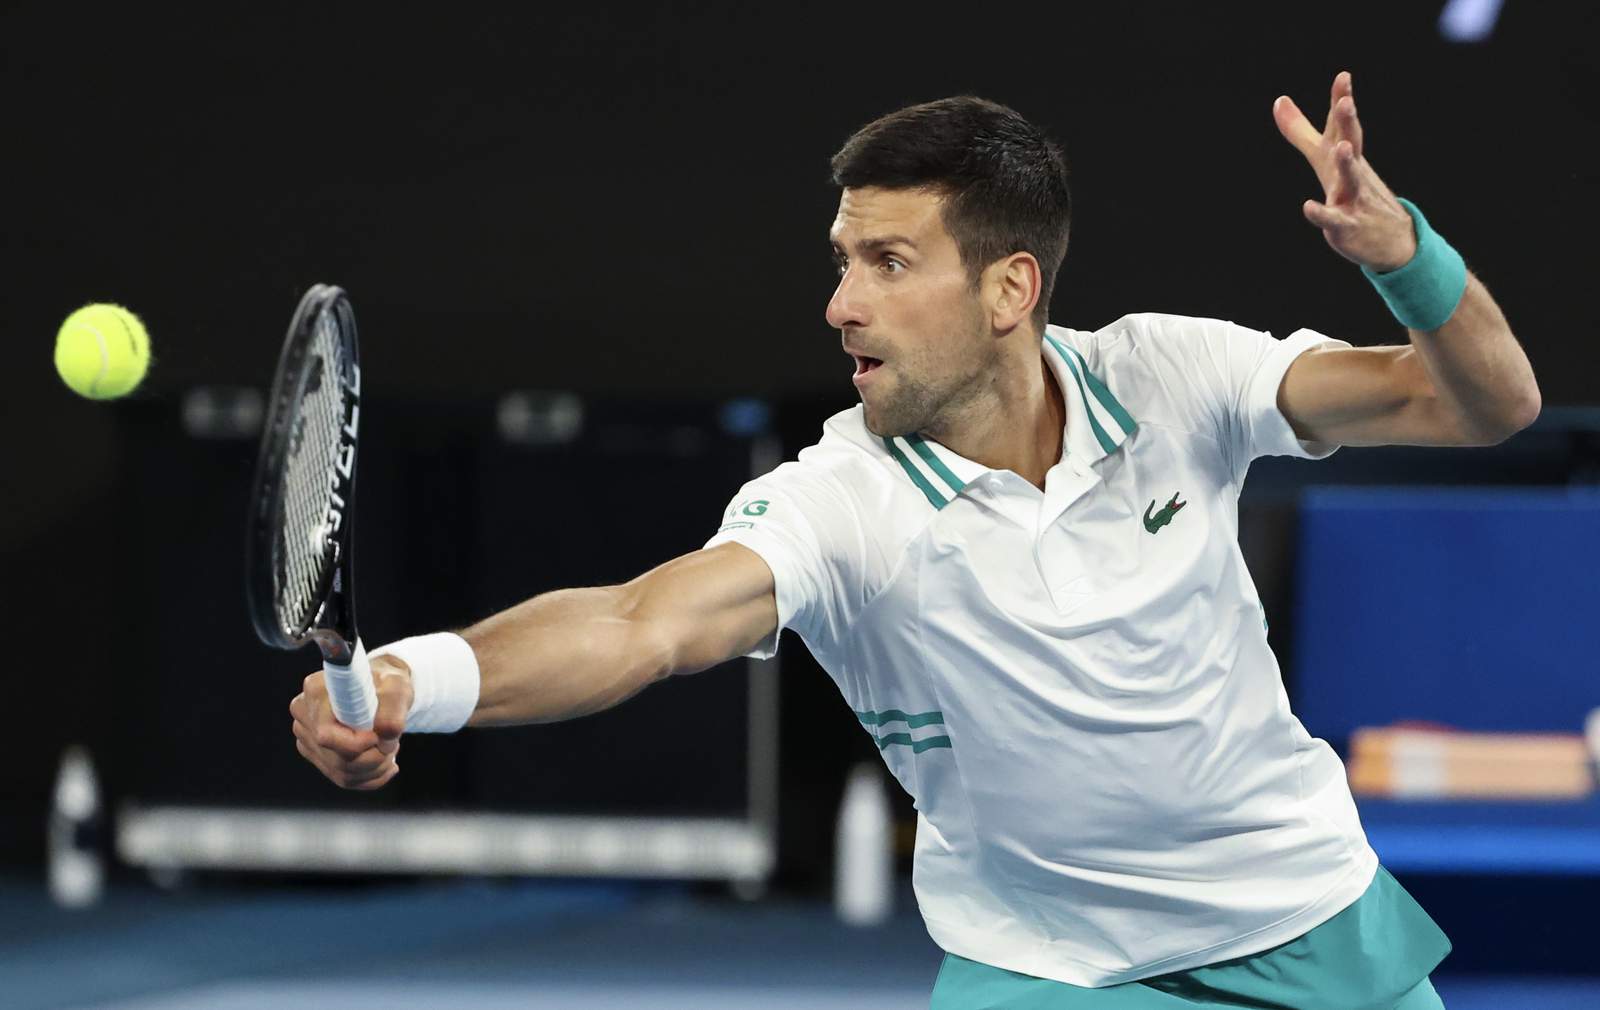 Injured Djokovic advances to quarters at Australian Open